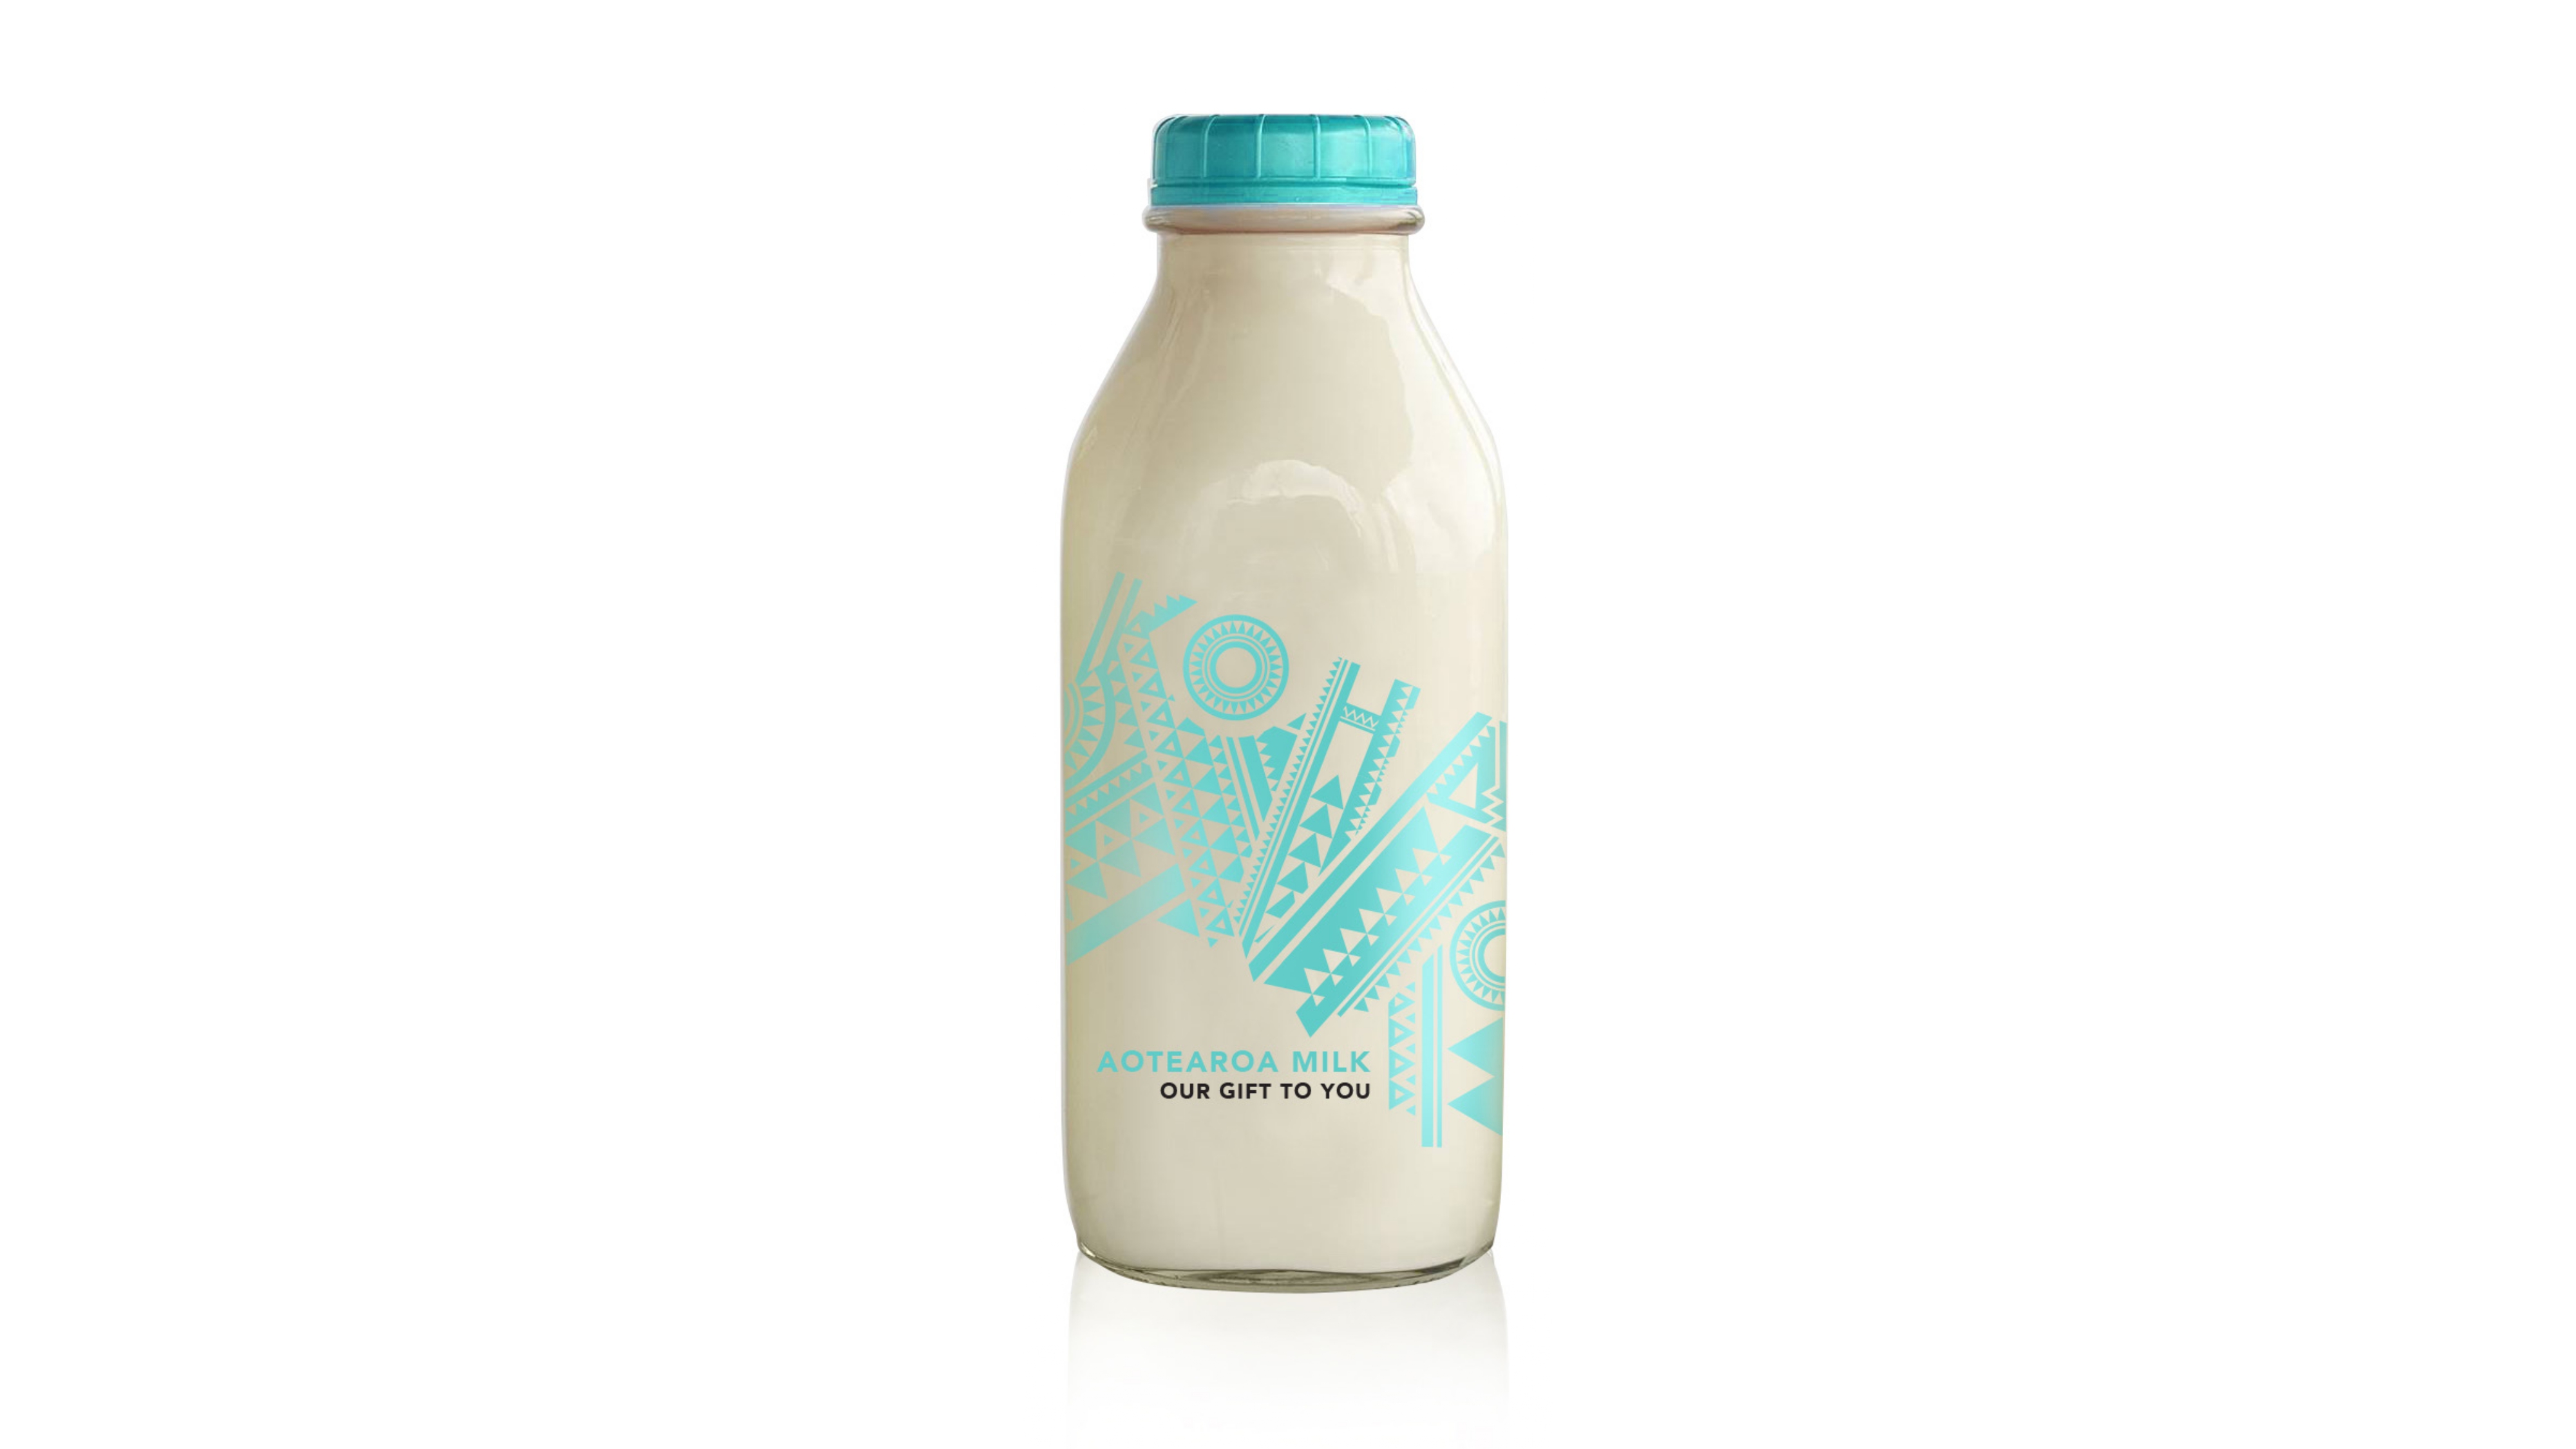 Koha Milk Project Image